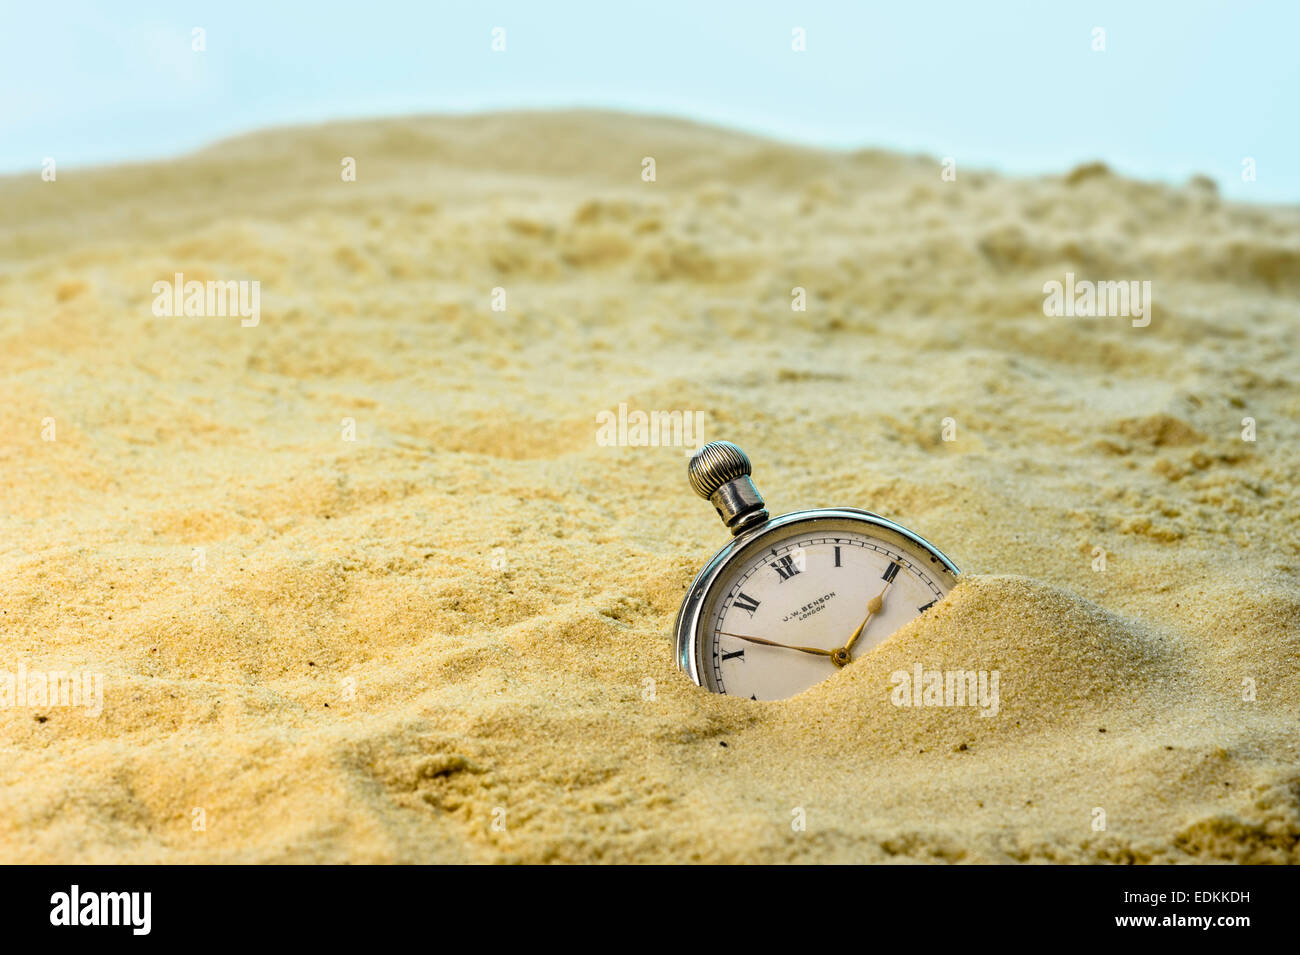 Pocket watch buried in a sandy beach. Stock Photo